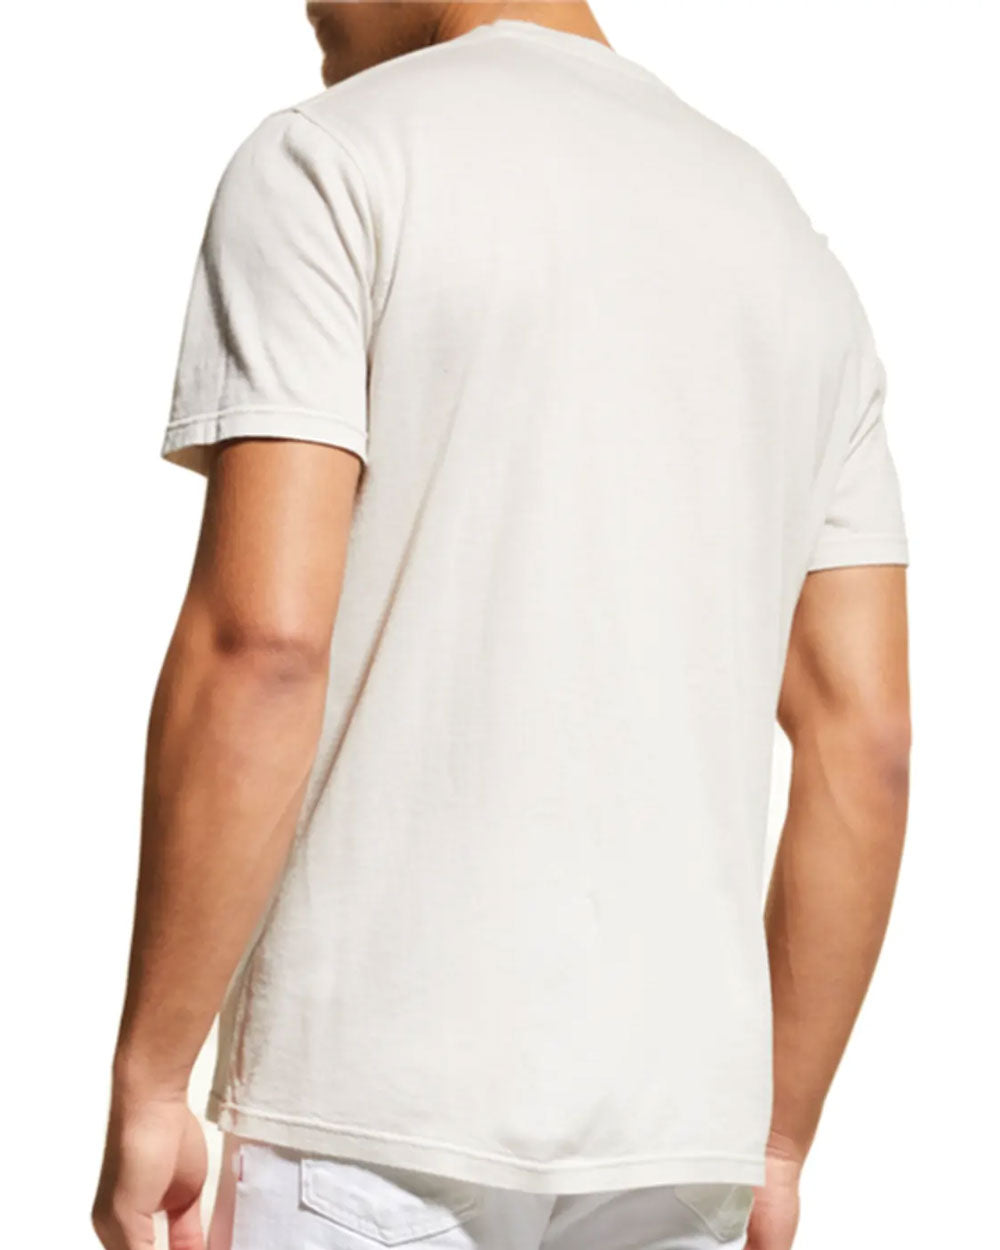 Winter White T-Shirt